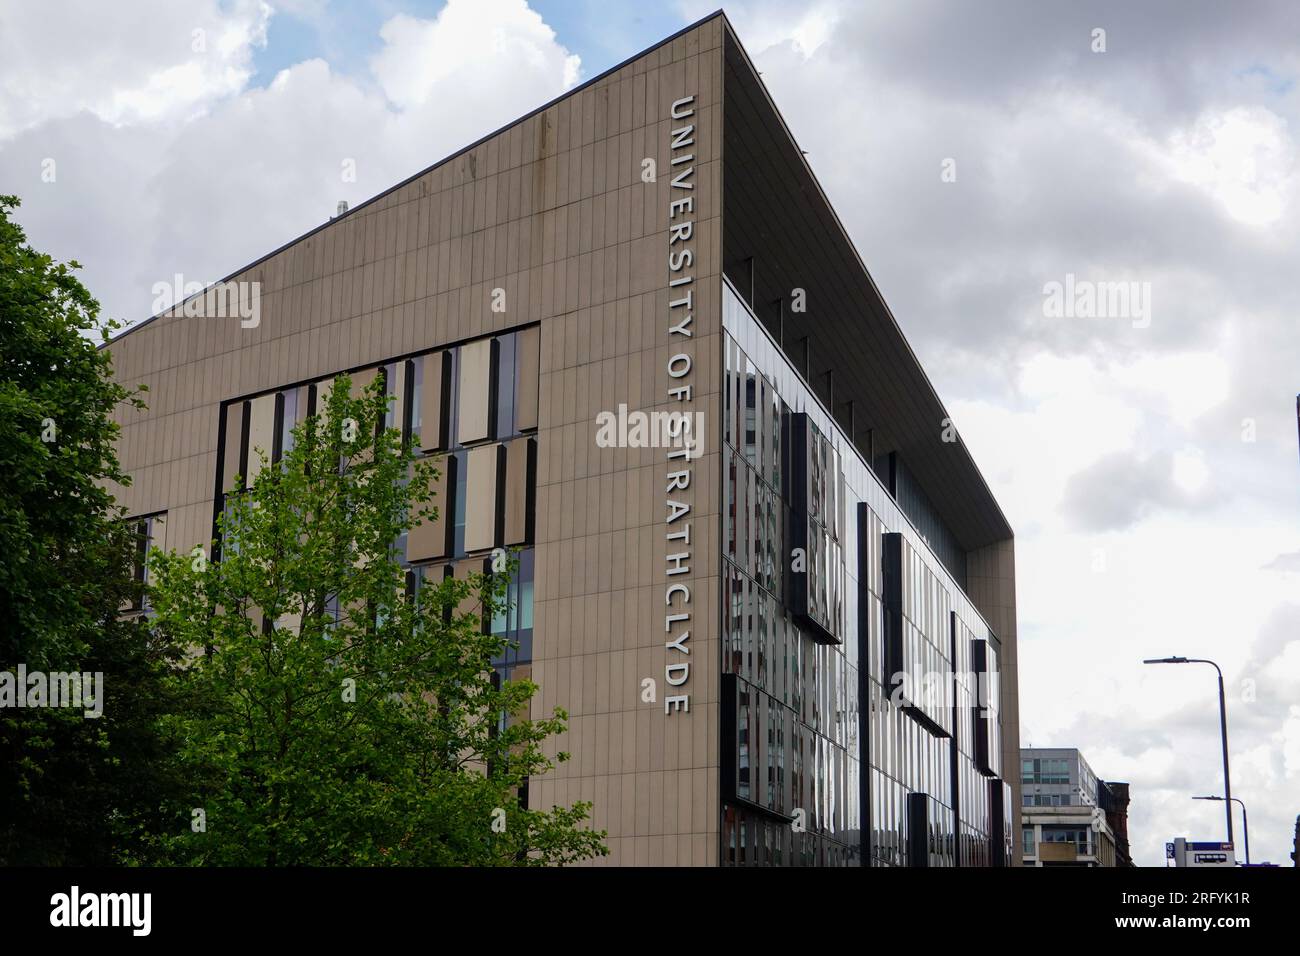 University of Strathclyde buildings, Glasgow, Scotland, UK. Stock Photo